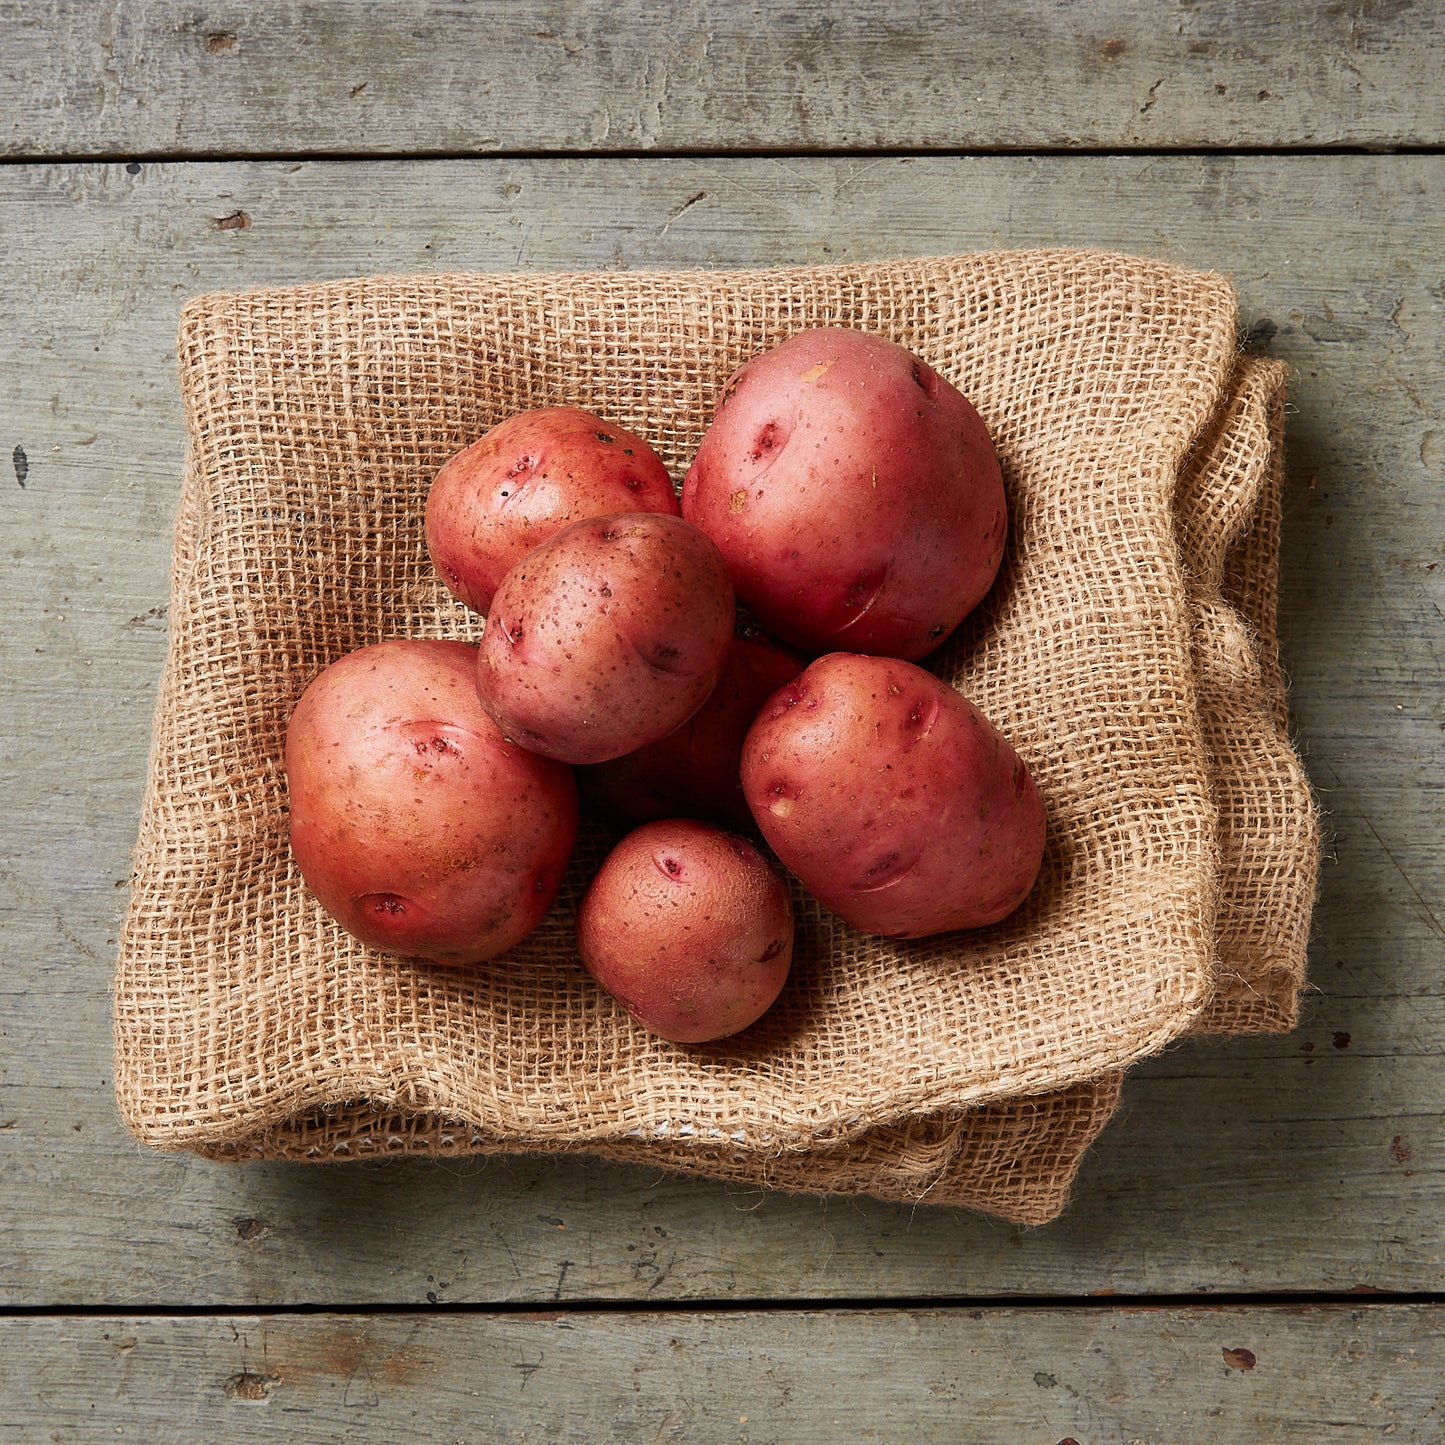 Red Potatoes - 2 lbs